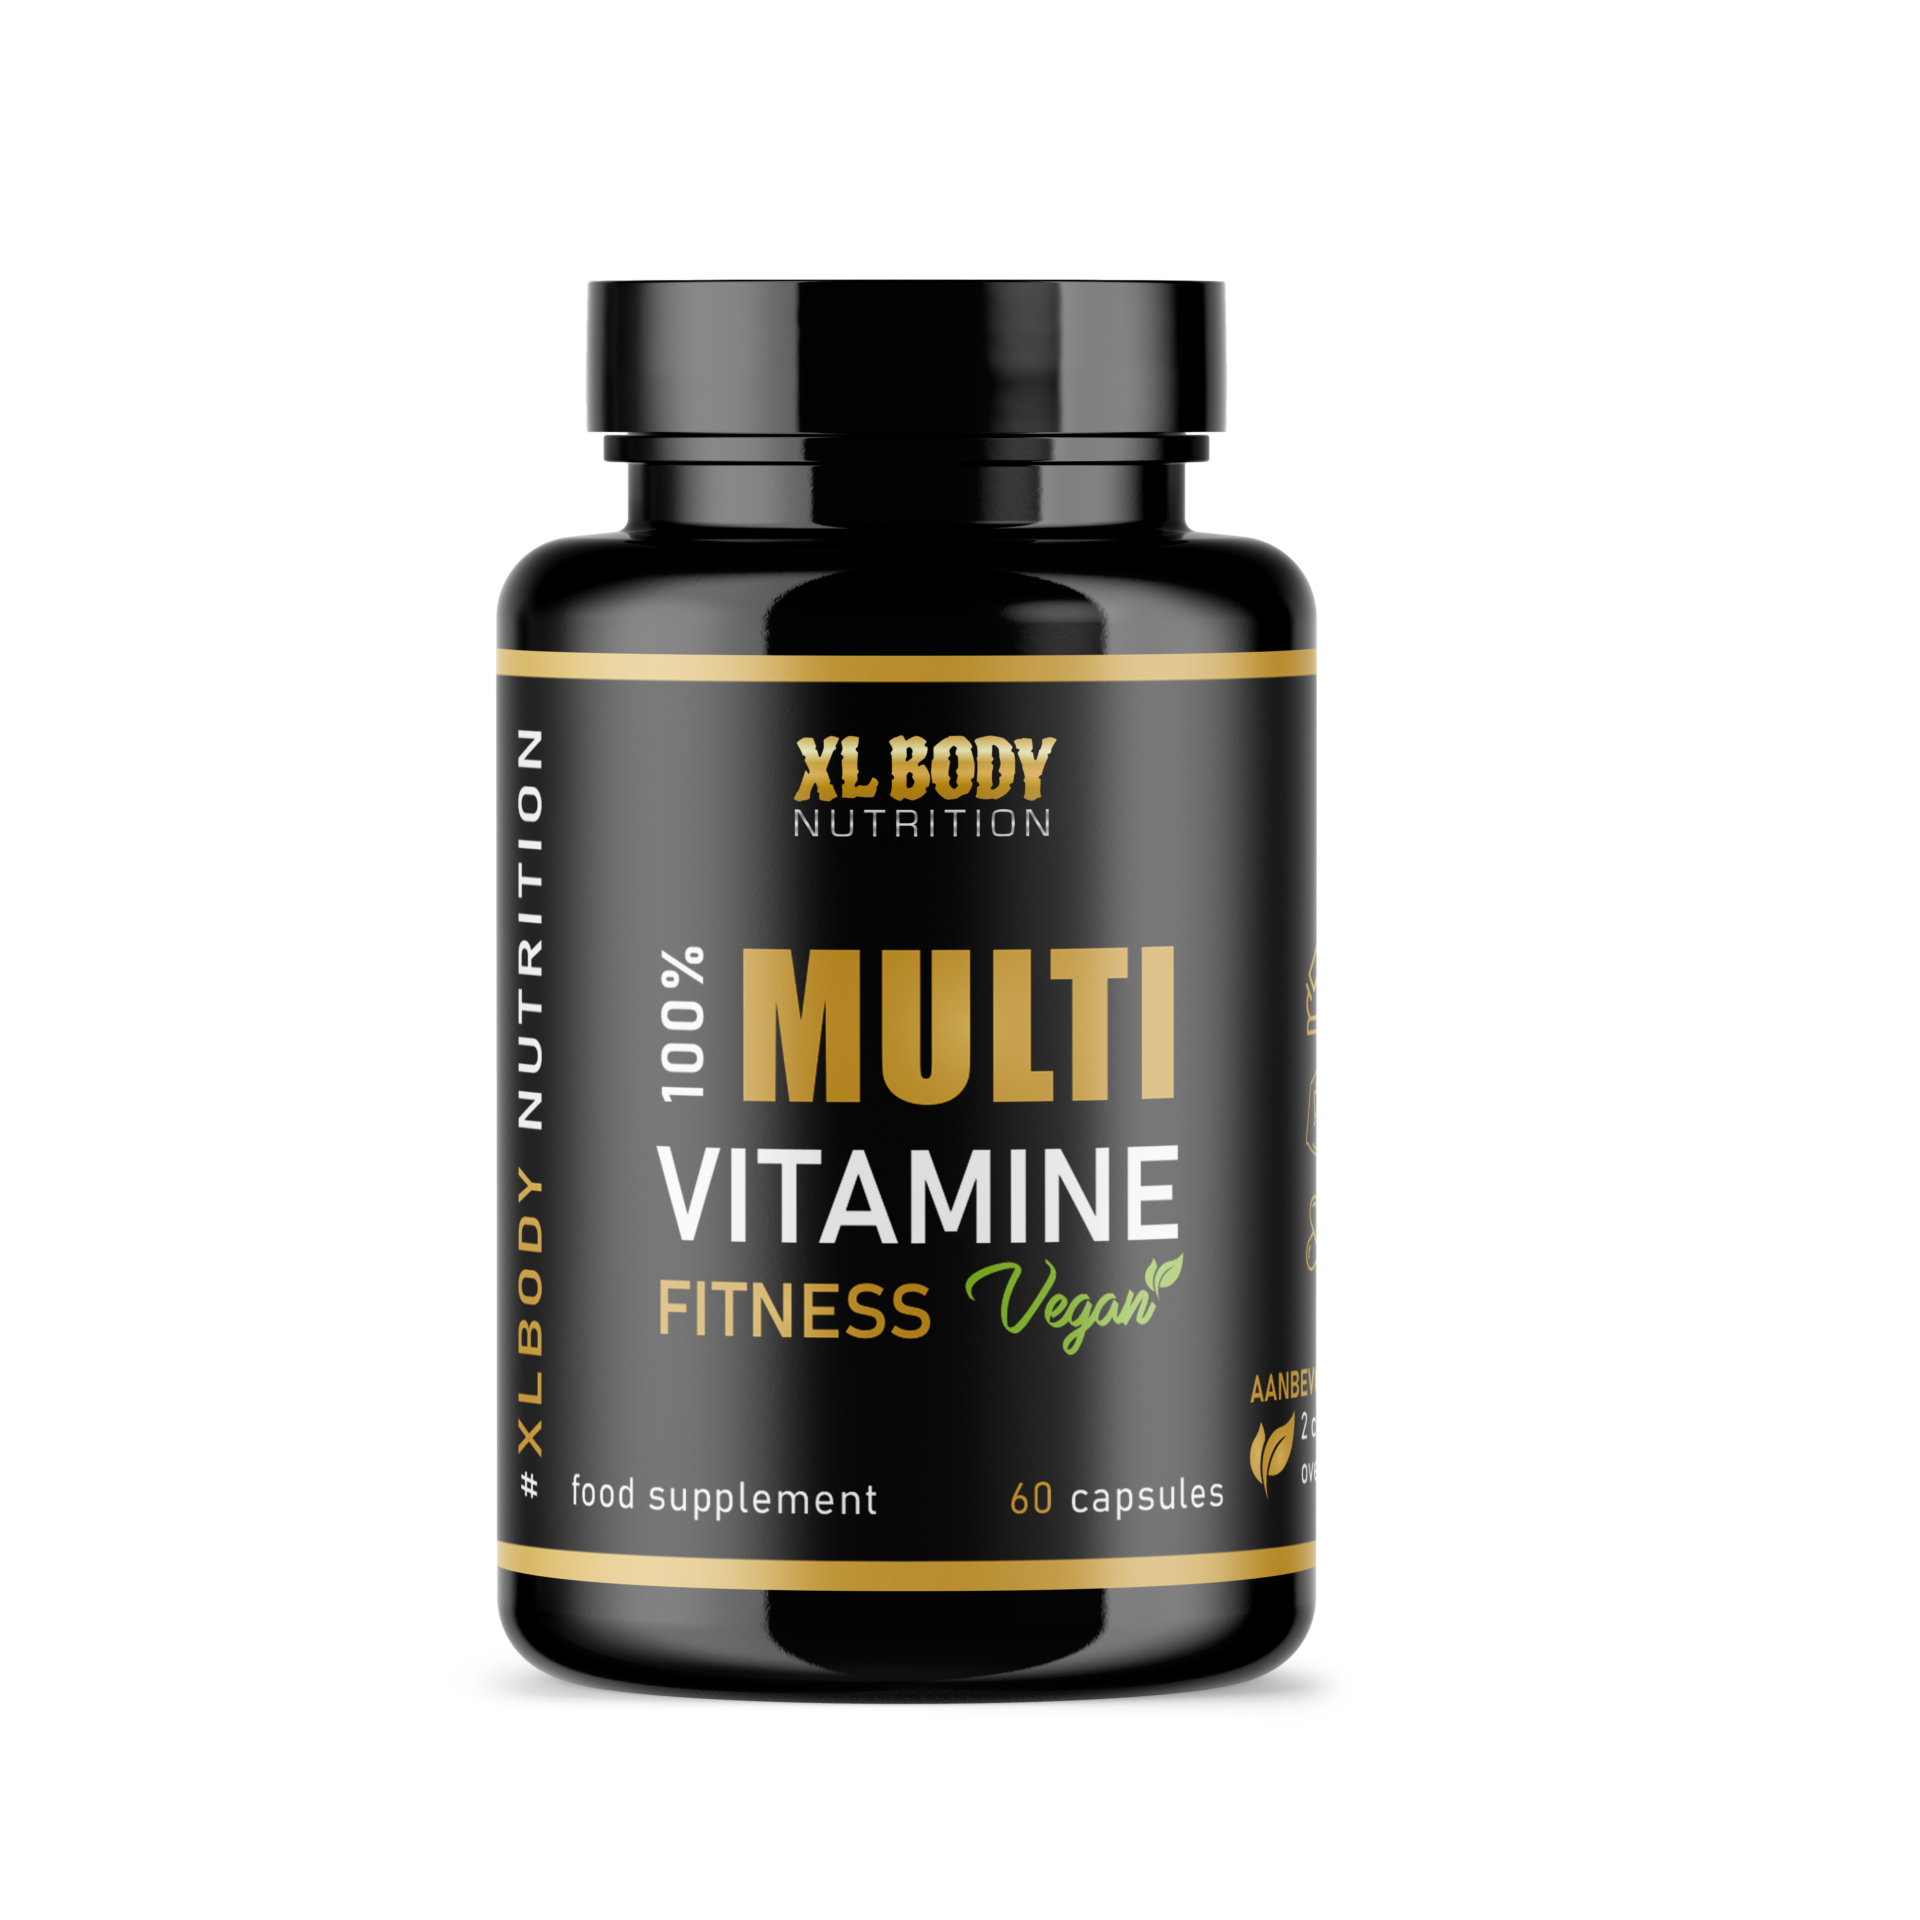 Wanten moed aangenaam 100% MULTI vitamine FITNESS VEGAN - XL Body Nutrition